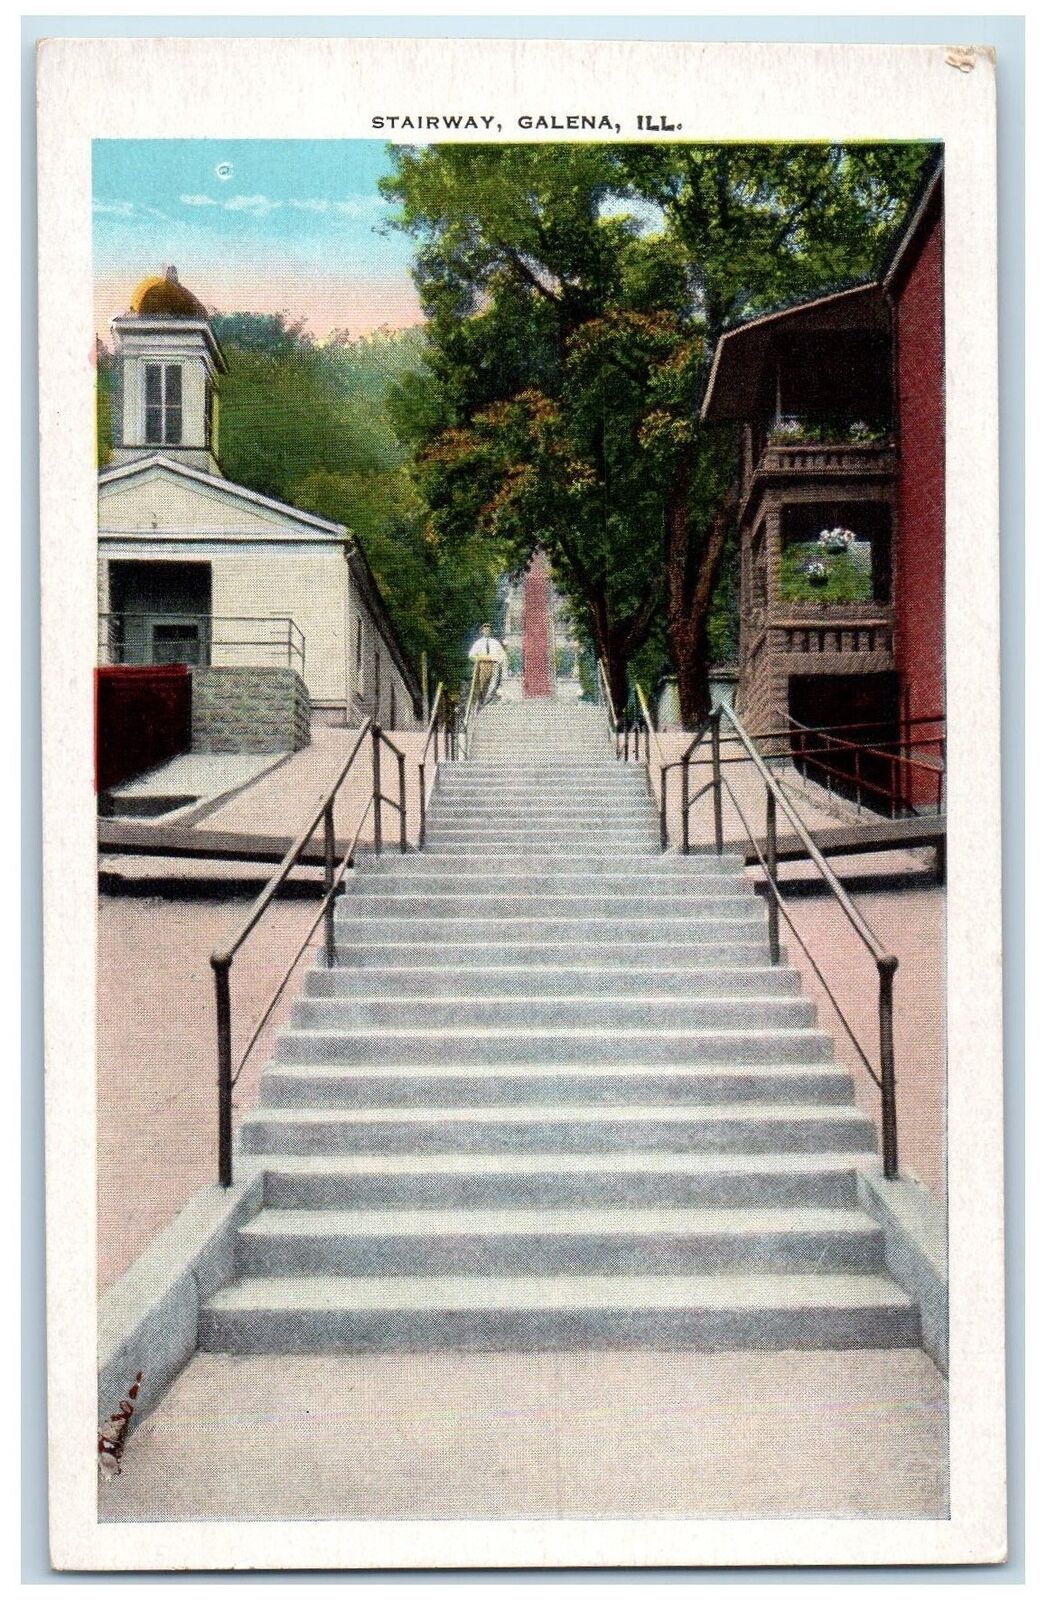 c1940s Stairway Man Standing Scene Galena Illinois IL Unposted Vintage Postcard